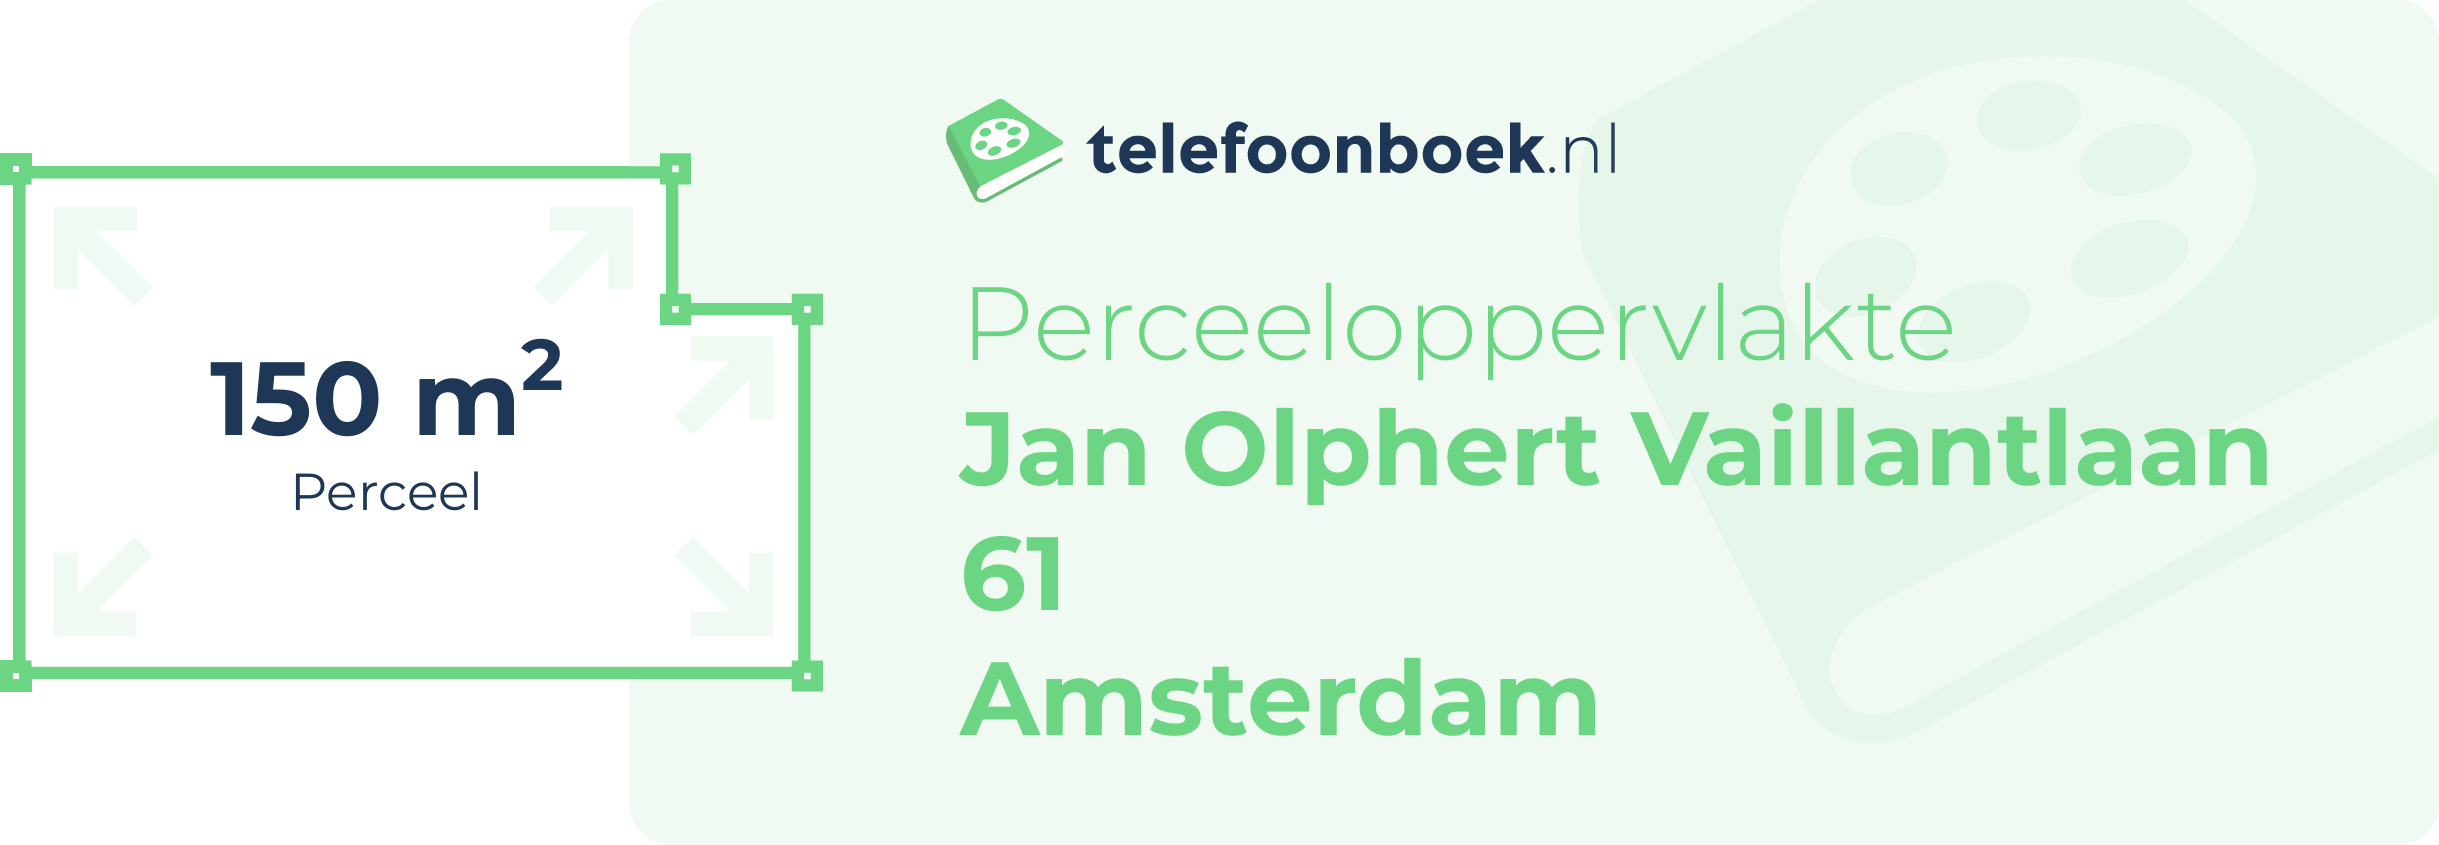 Perceeloppervlakte Jan Olphert Vaillantlaan 61 Amsterdam